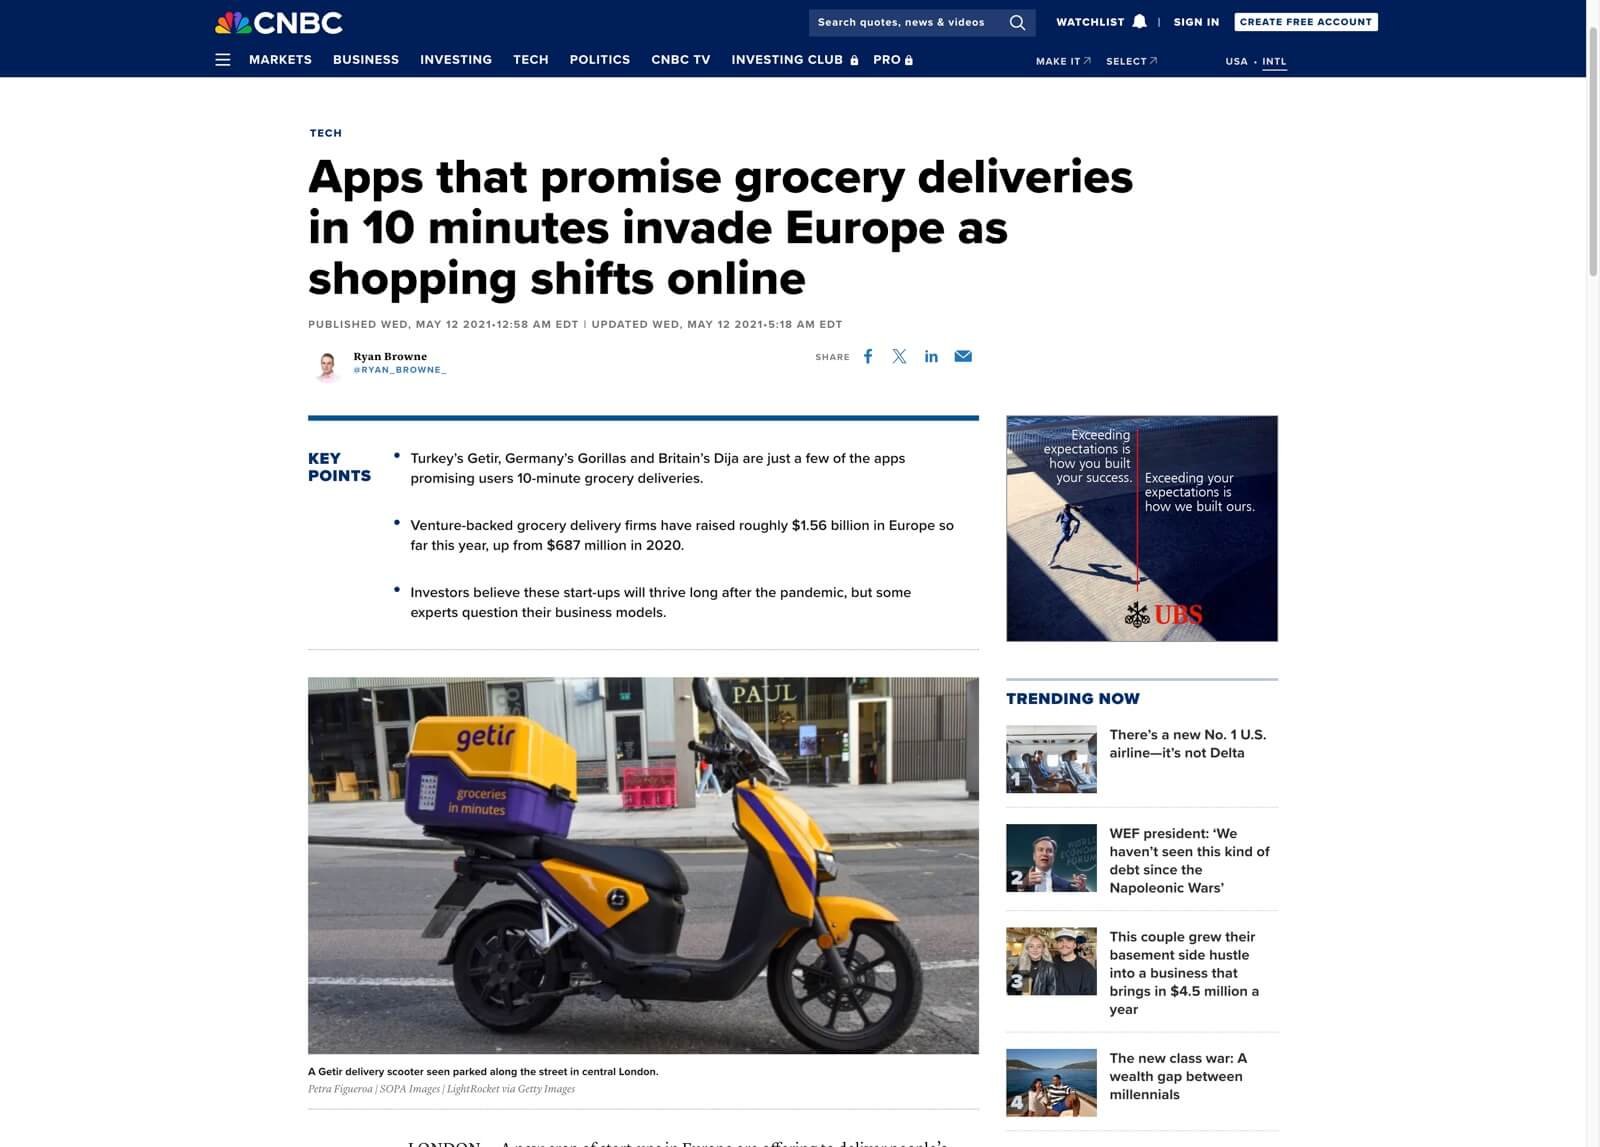 CNBC-Getir-Gorillas-and-Dija-Speedy-grocery-delivery-apps-invade-Europe.jpg